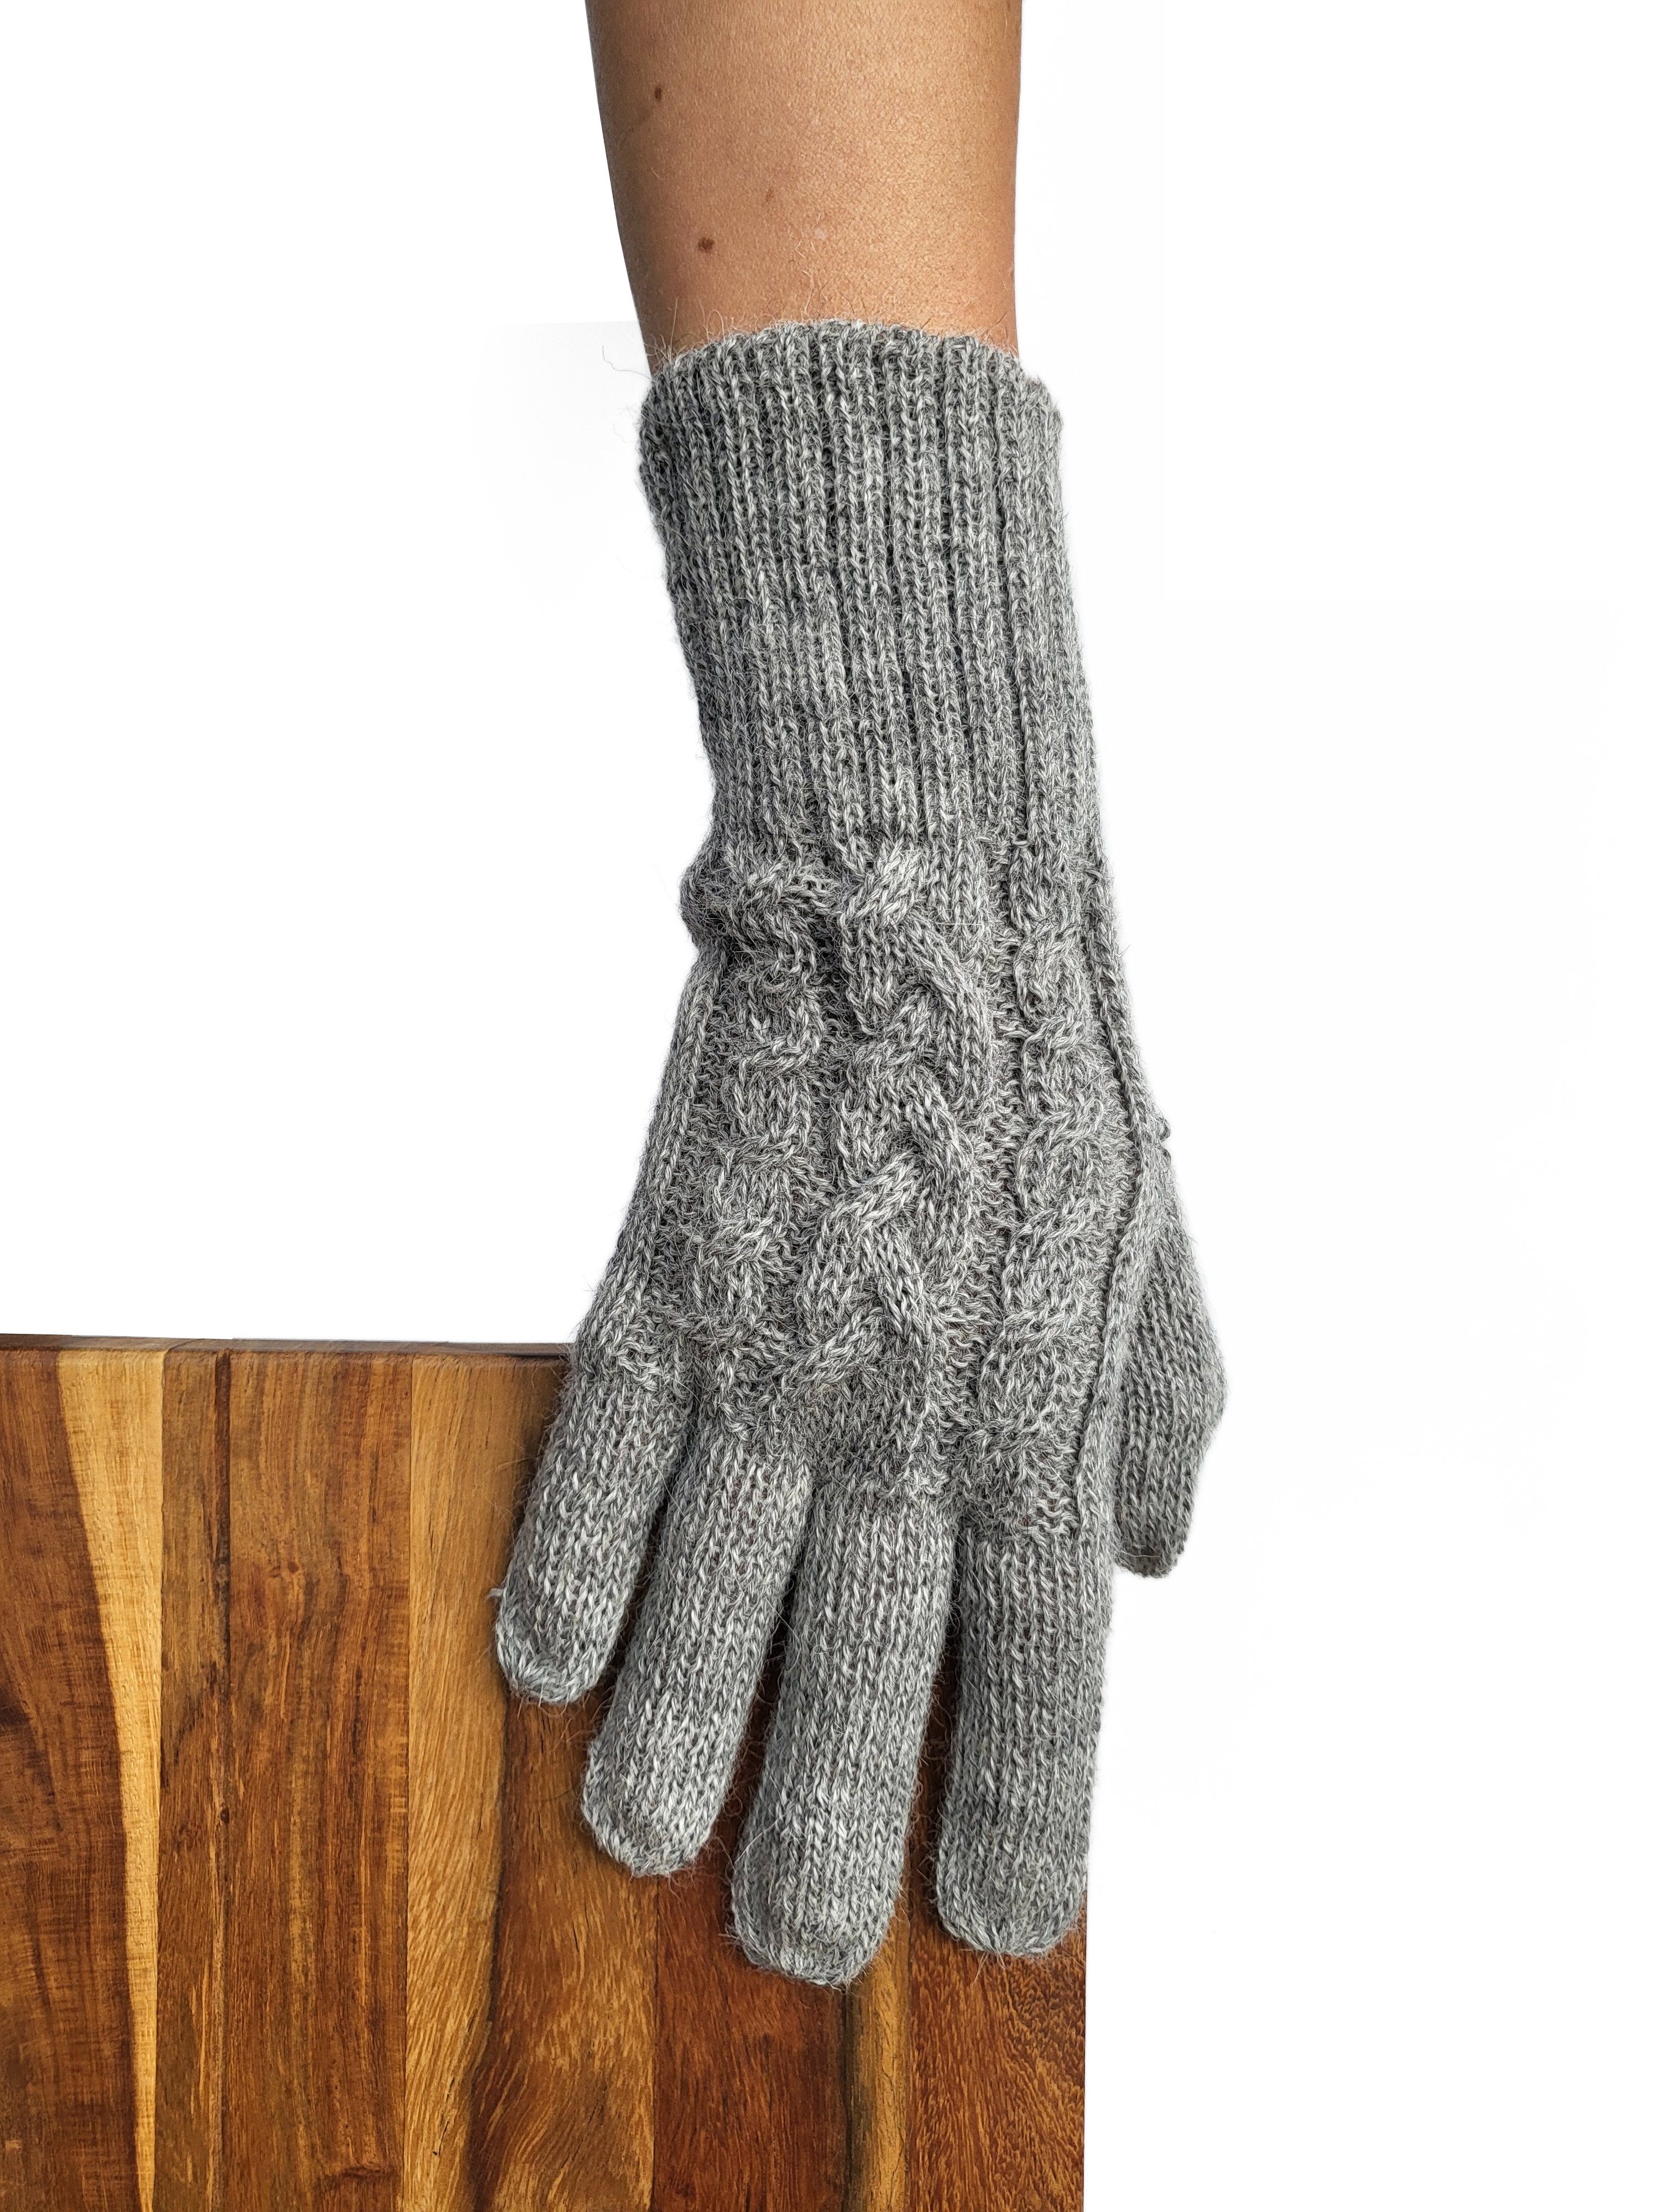 Posh Gear Alpakawolle grau hell Fingerhandschuhe aus 100% Guantibrada Strickhandschuhe Alpaka